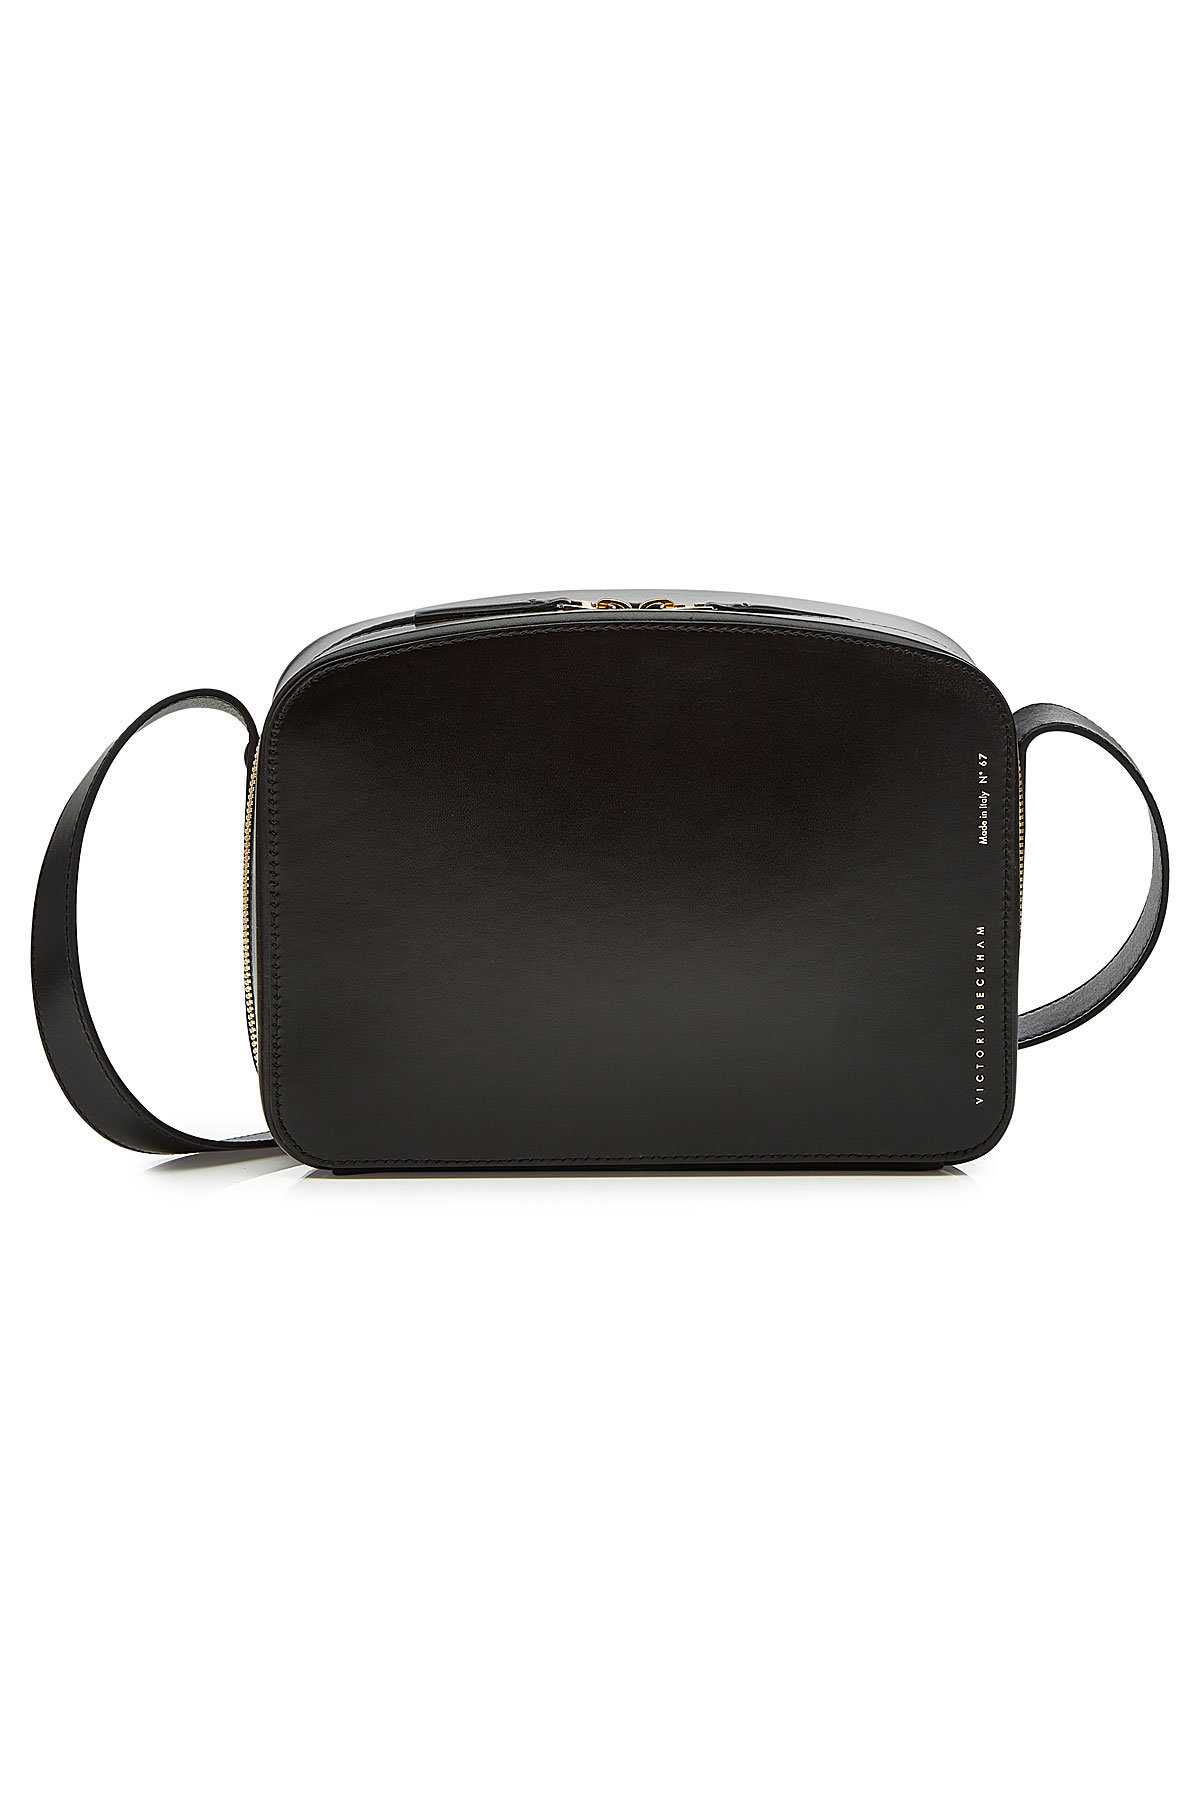 Vanity Leather Camera Bag by Victoria Beckham